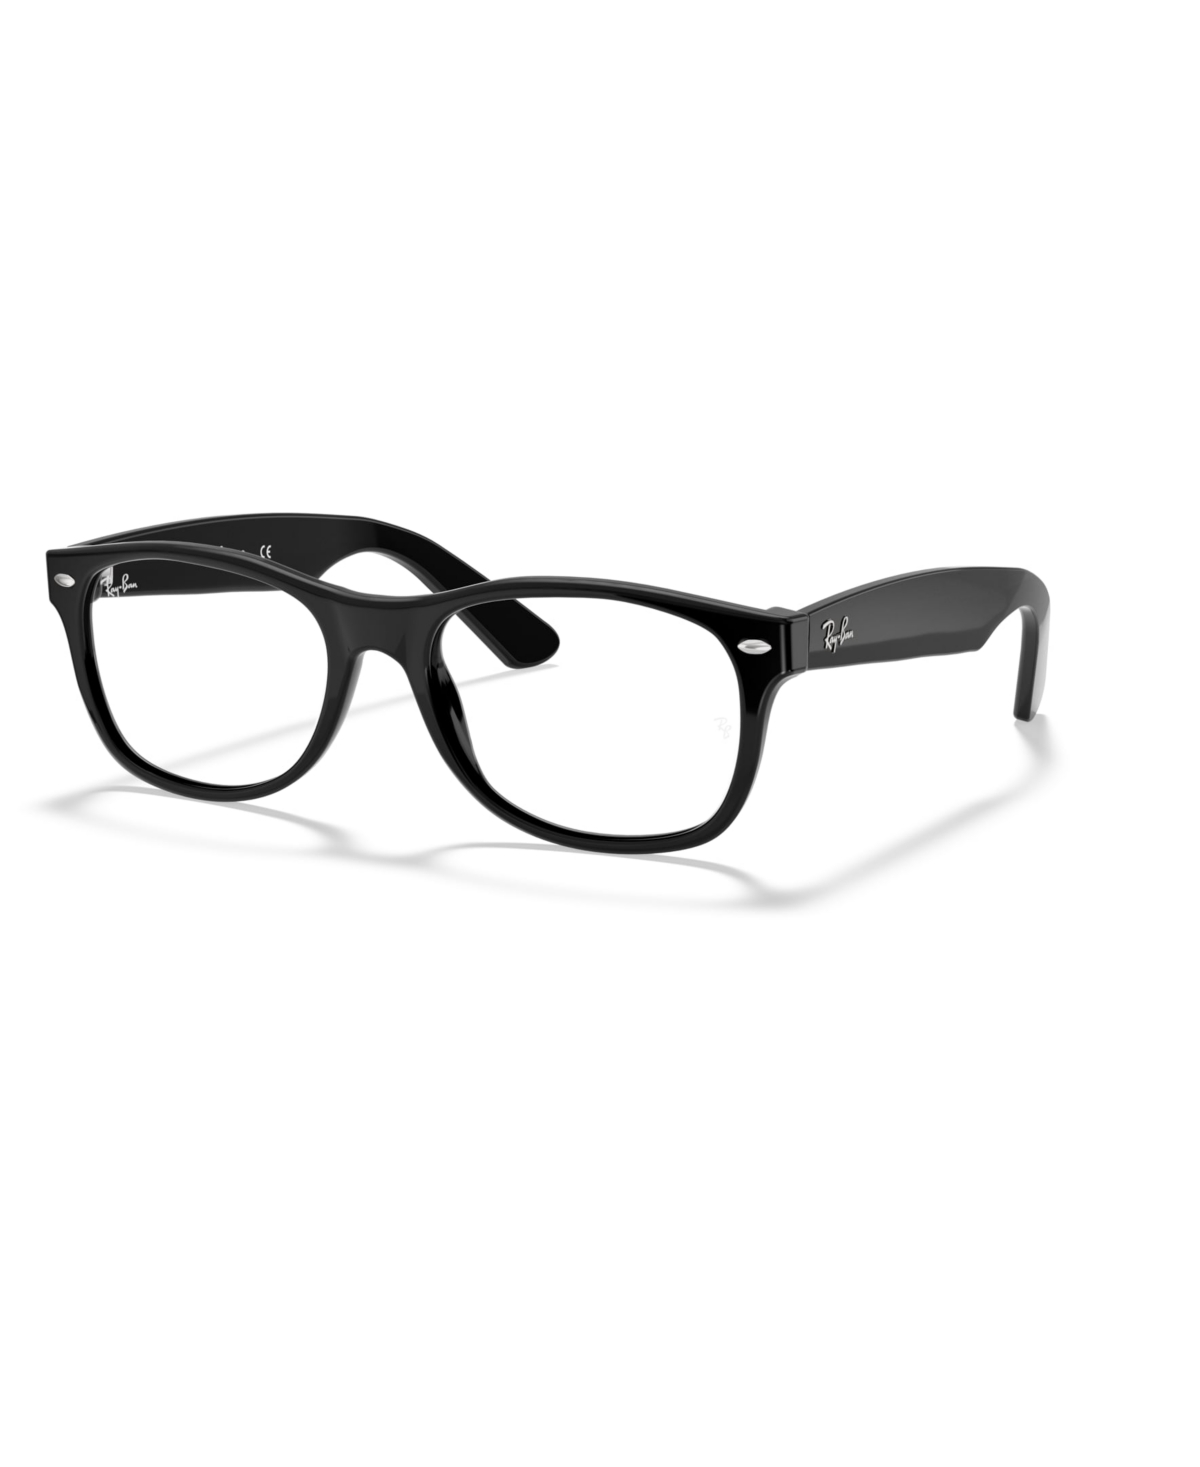 RX5184 Unisex Square Eyeglasses - Black